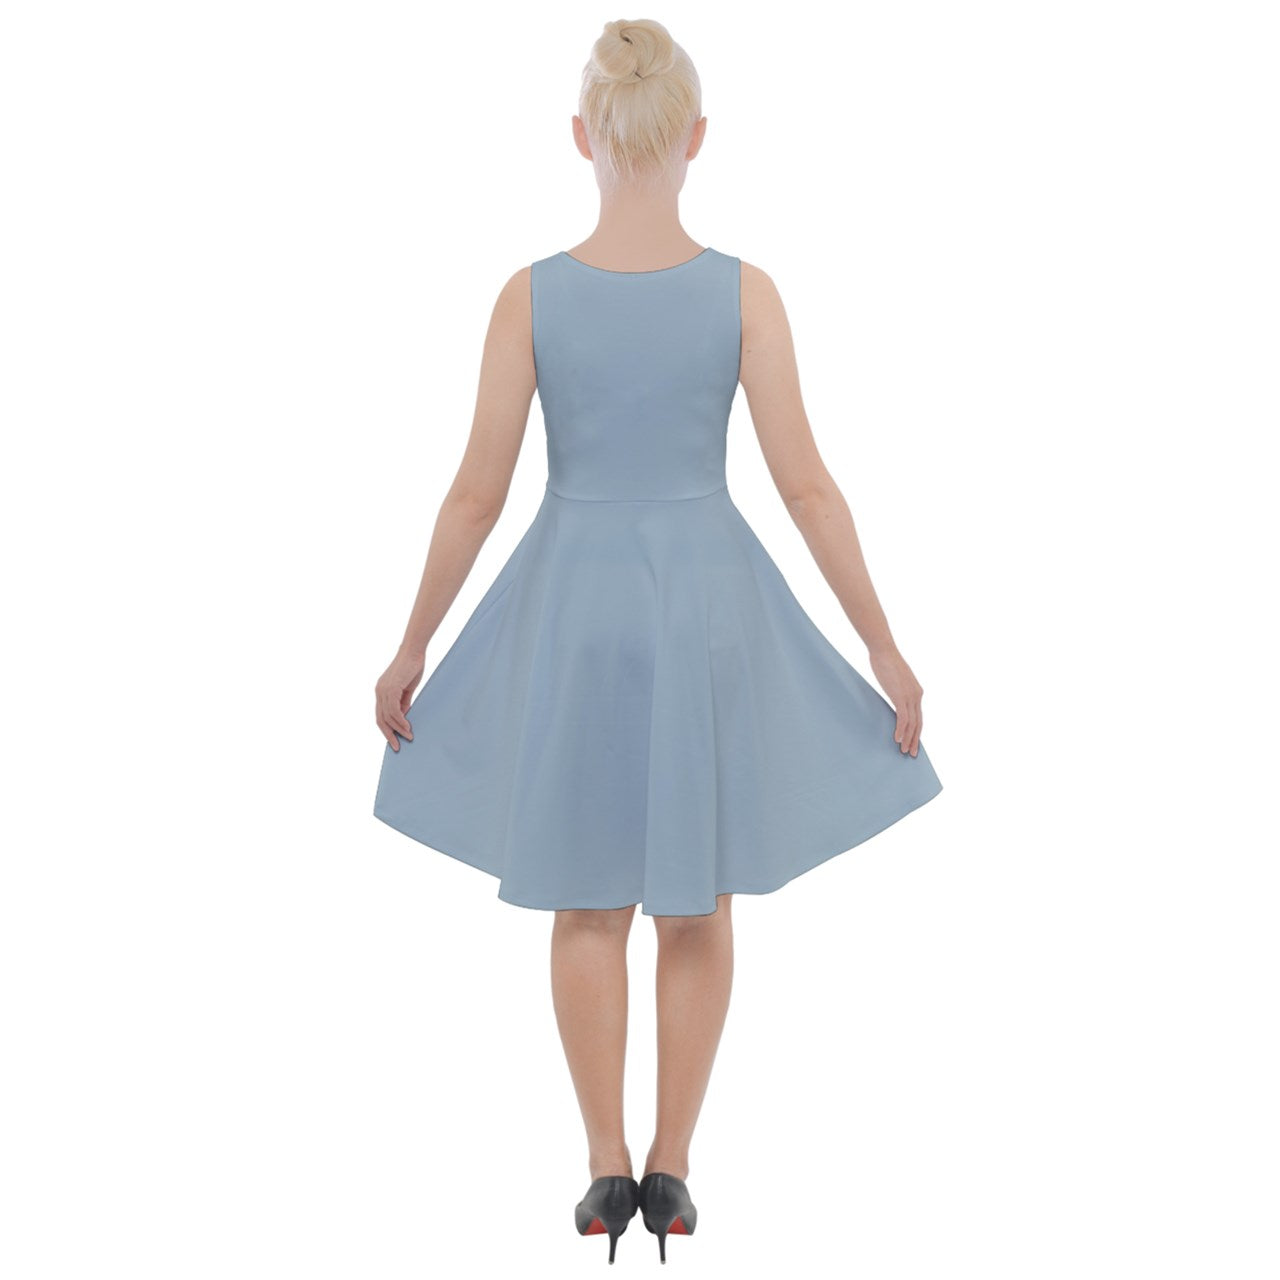 Pattern 198 Knee-Length Skater Dress with Pockets